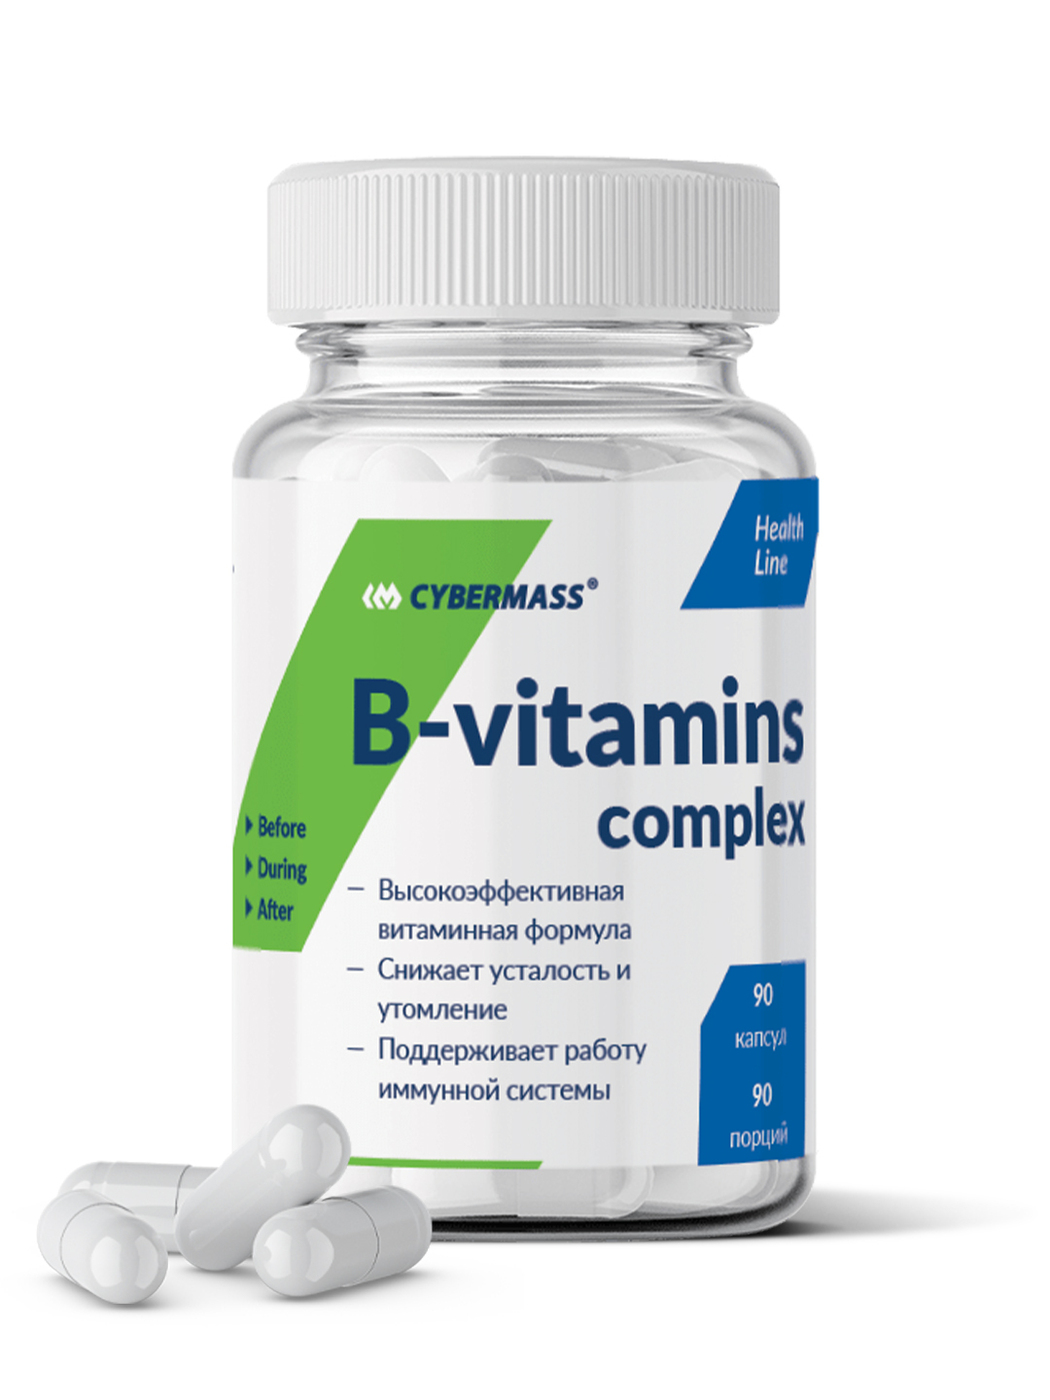 CYBERMASS - B-vitamins complex 90кап